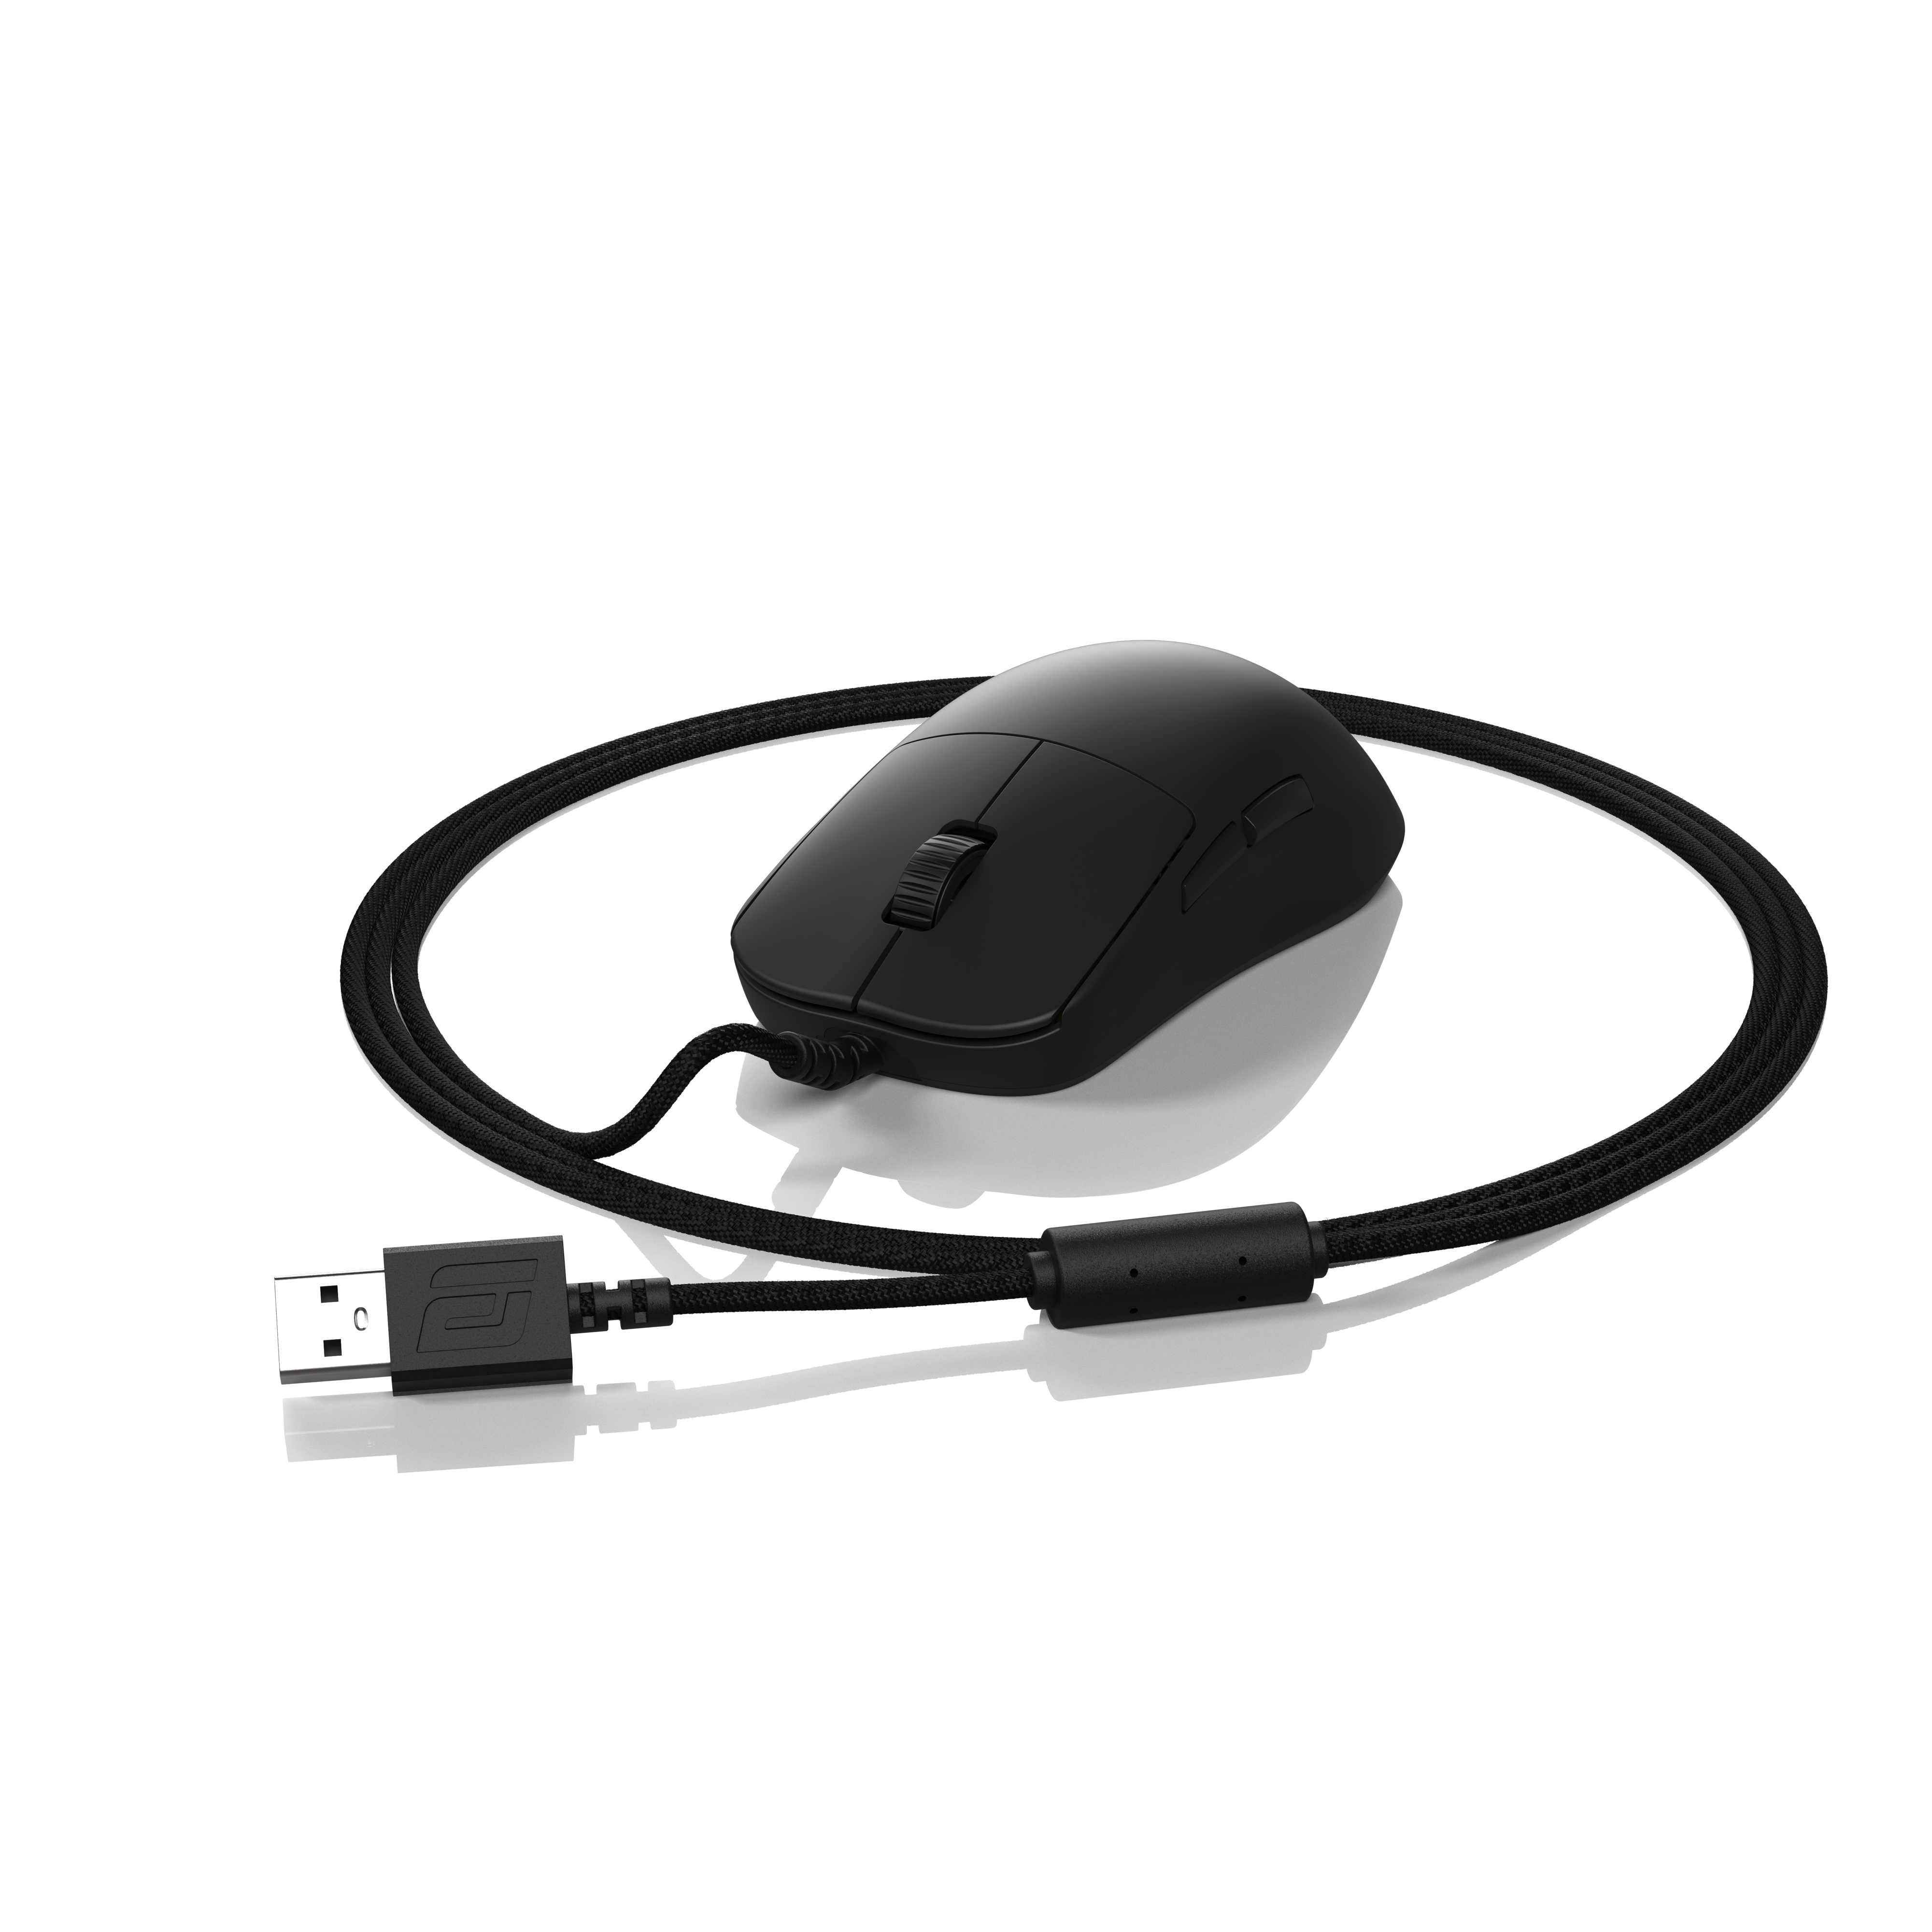  - OP1 8k Gaming Mouse - Black